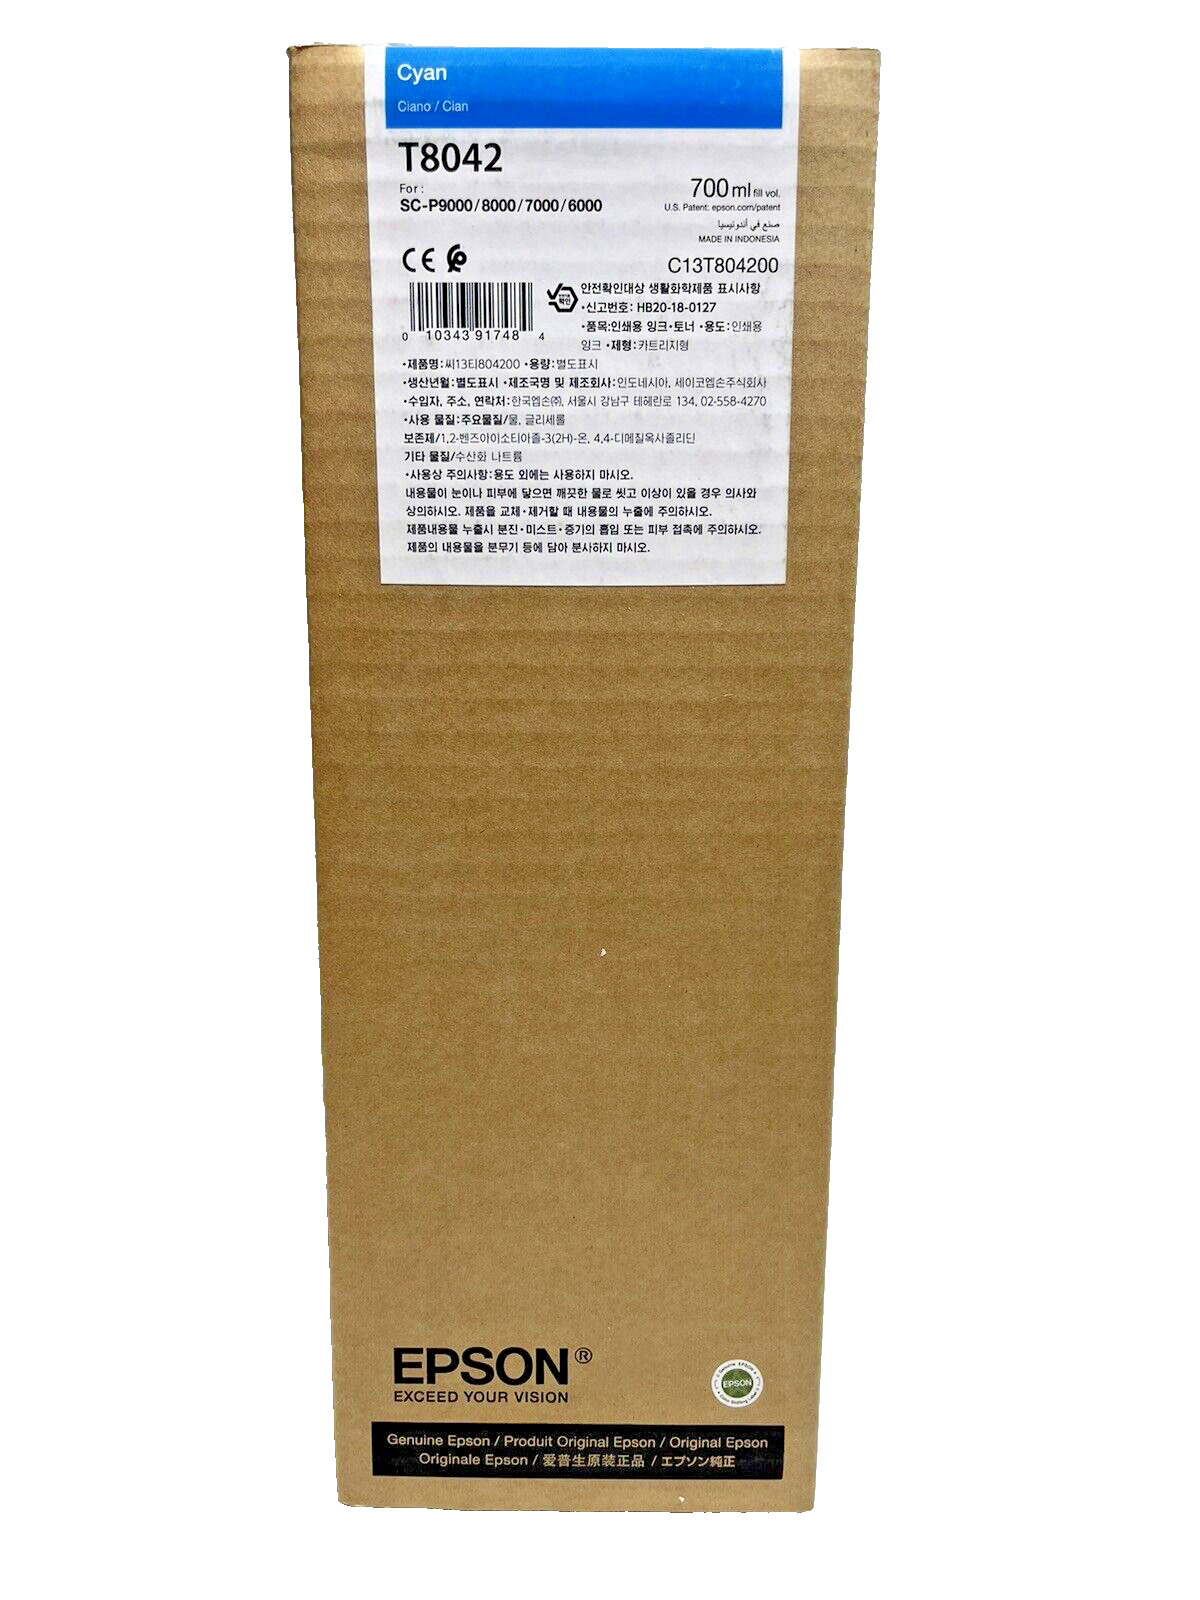 EXPIRED Jan 2023 - Genuine Epson Cyan Ink Cartridge T8042